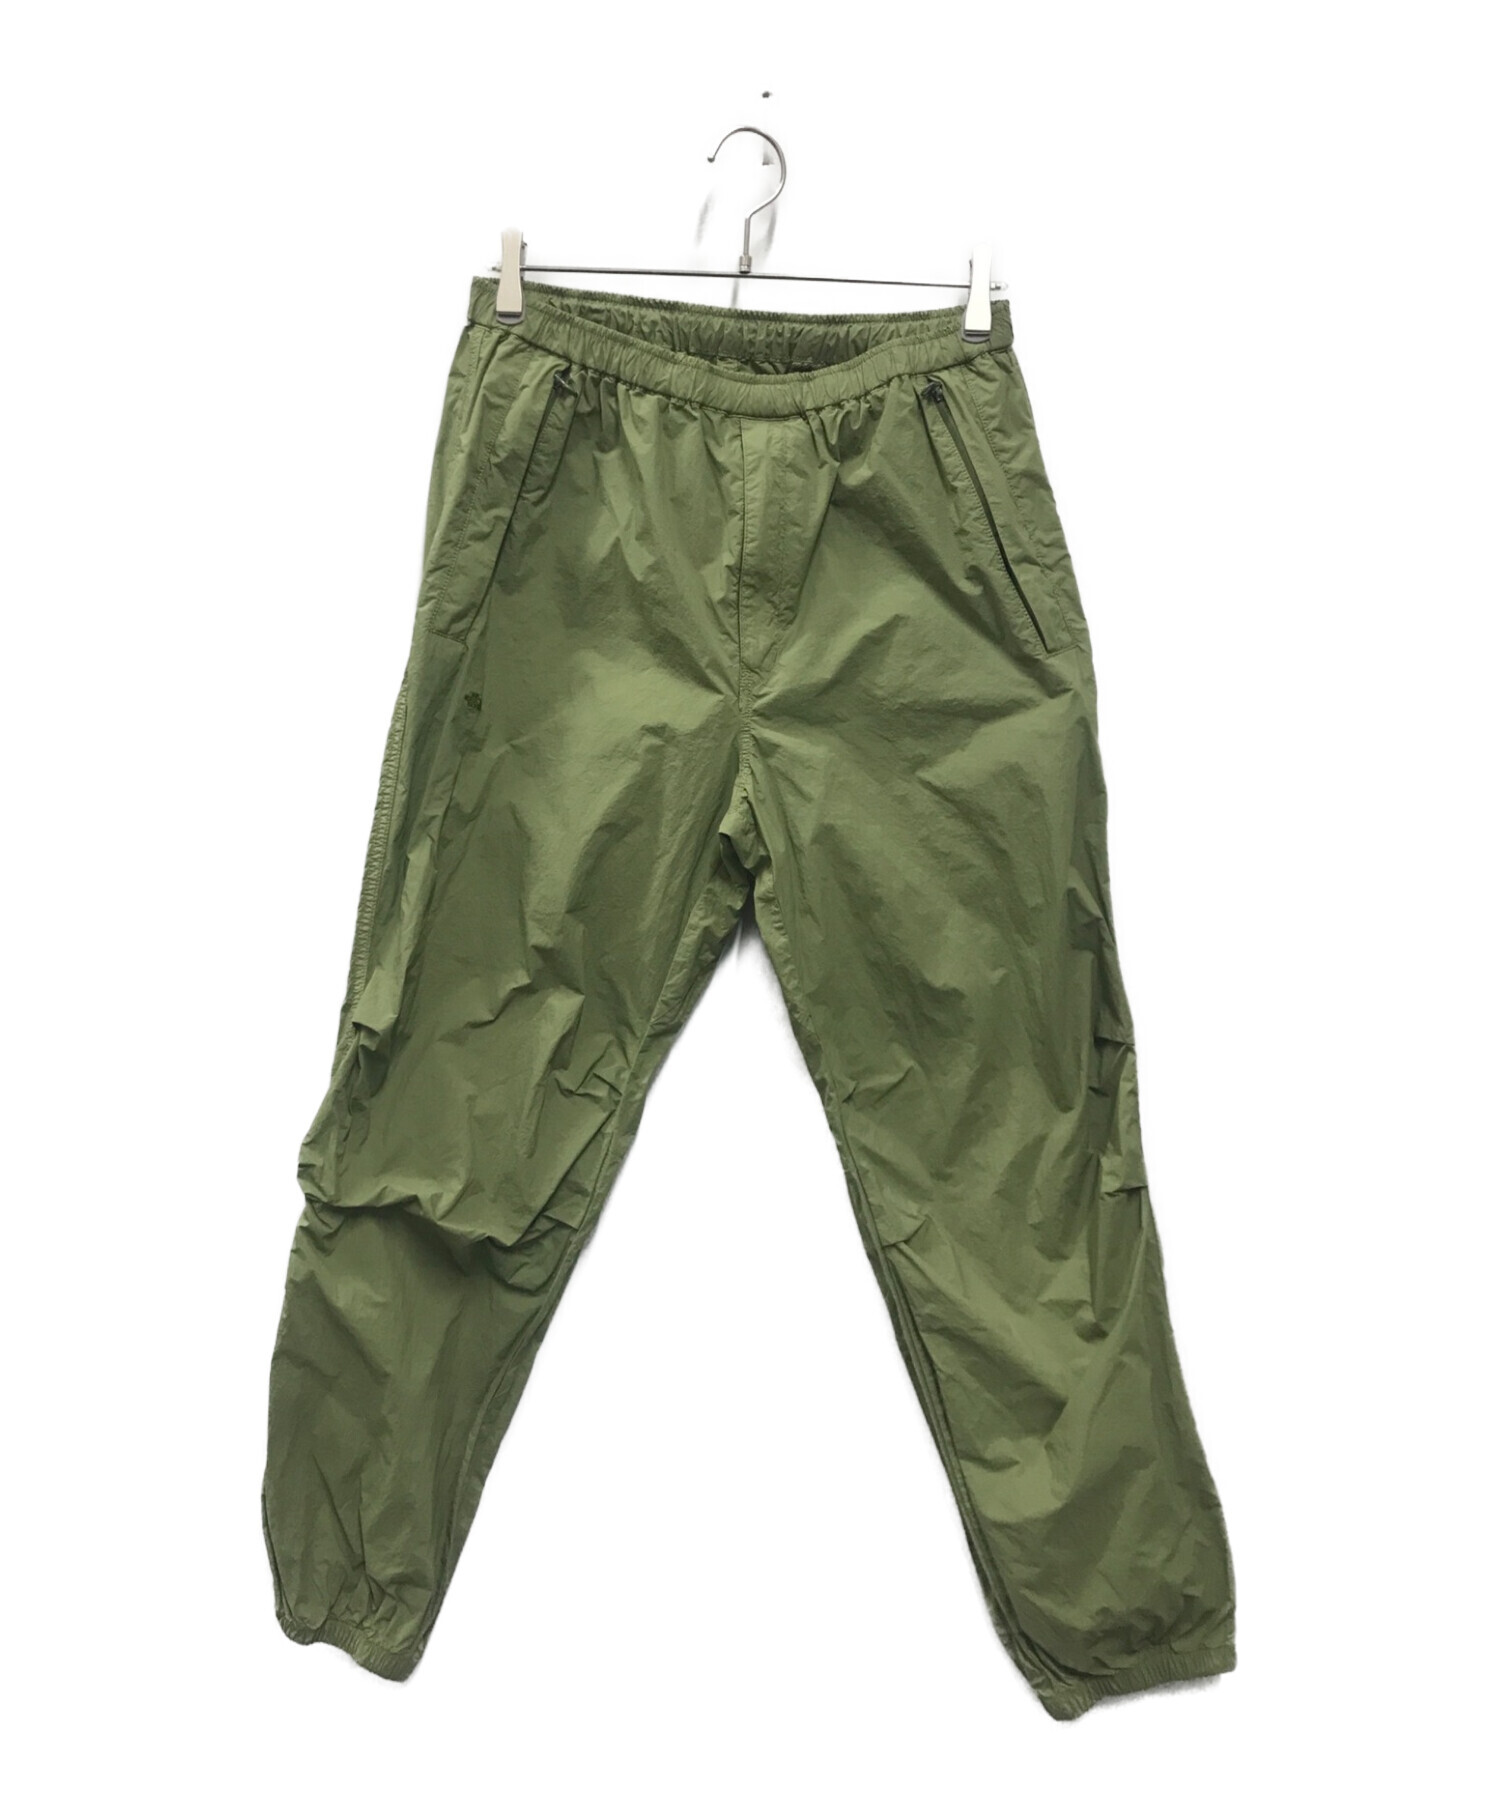 THE NORTHFACE PURPLELABEL (ザ・ノースフェイス パープルレーベル) Garment Dye Mountain Wind  Pants オリーブ サイズ:W32